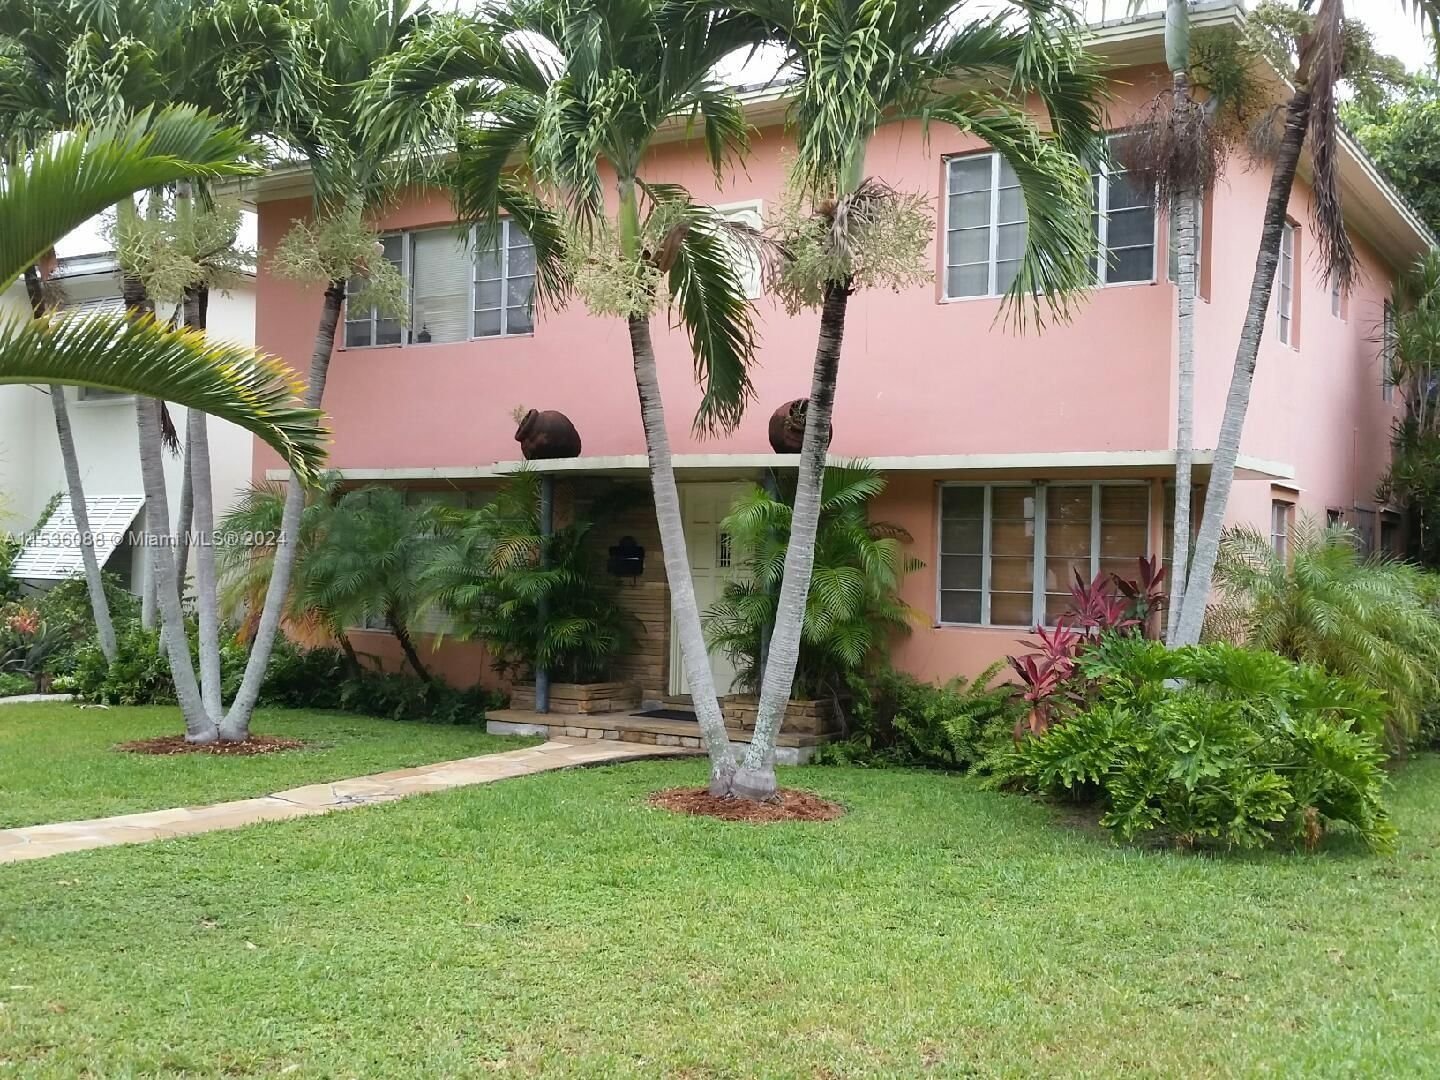 Real estate property located at 3705 Ponce De Leon Blvd, Miami-Dade County, COCONUT GR SEC 1 C GAB, Coral Gables, FL